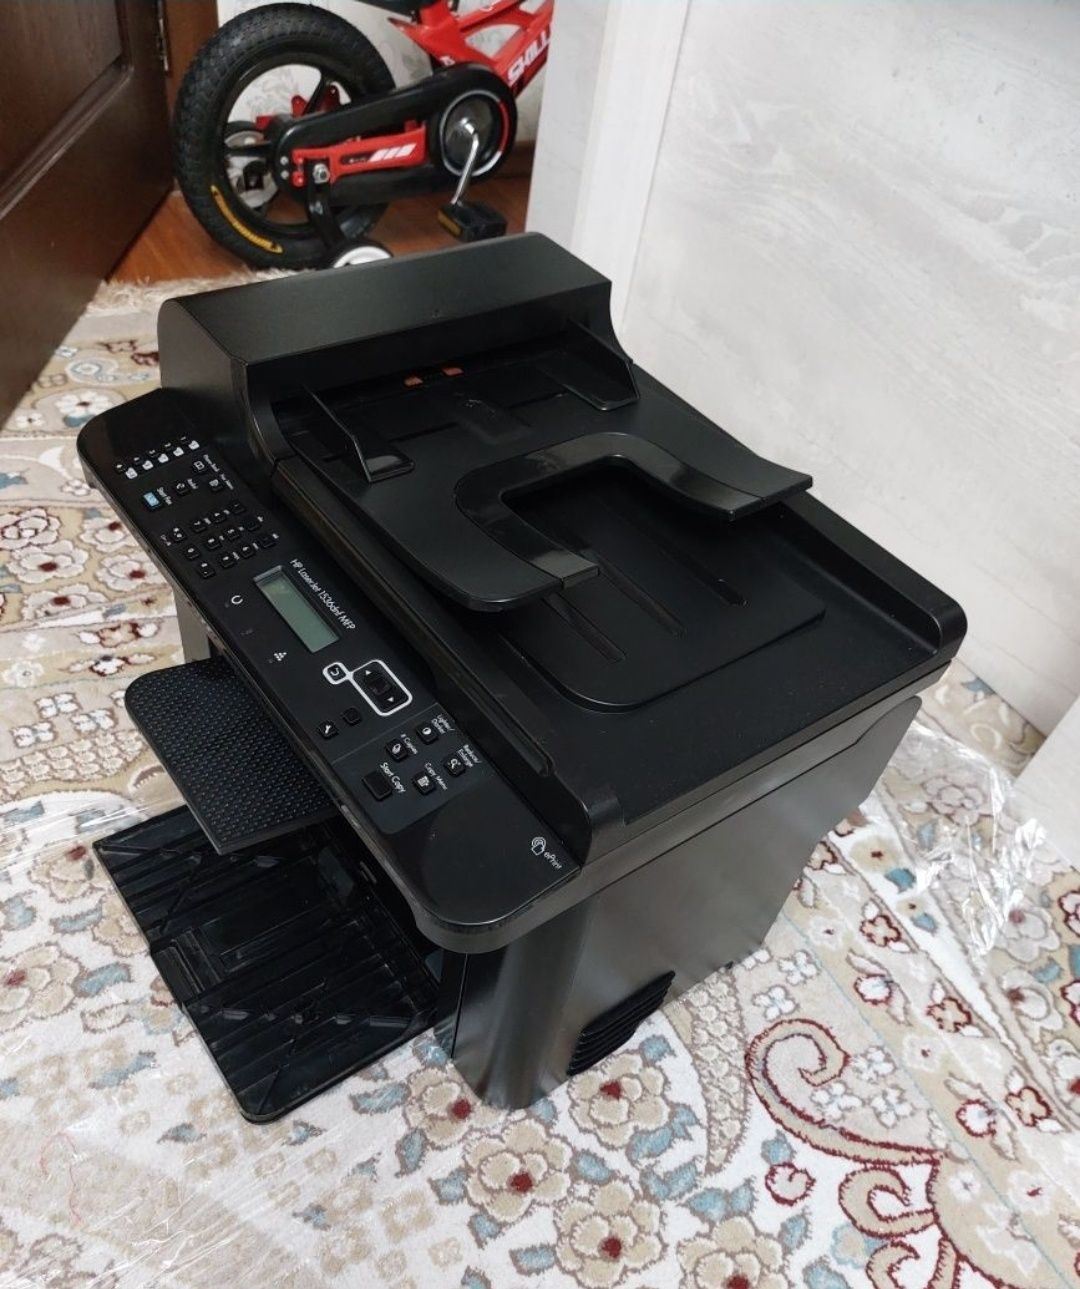 HP LaserJet 1536dnf МФУ
принтер, сканер, копир.